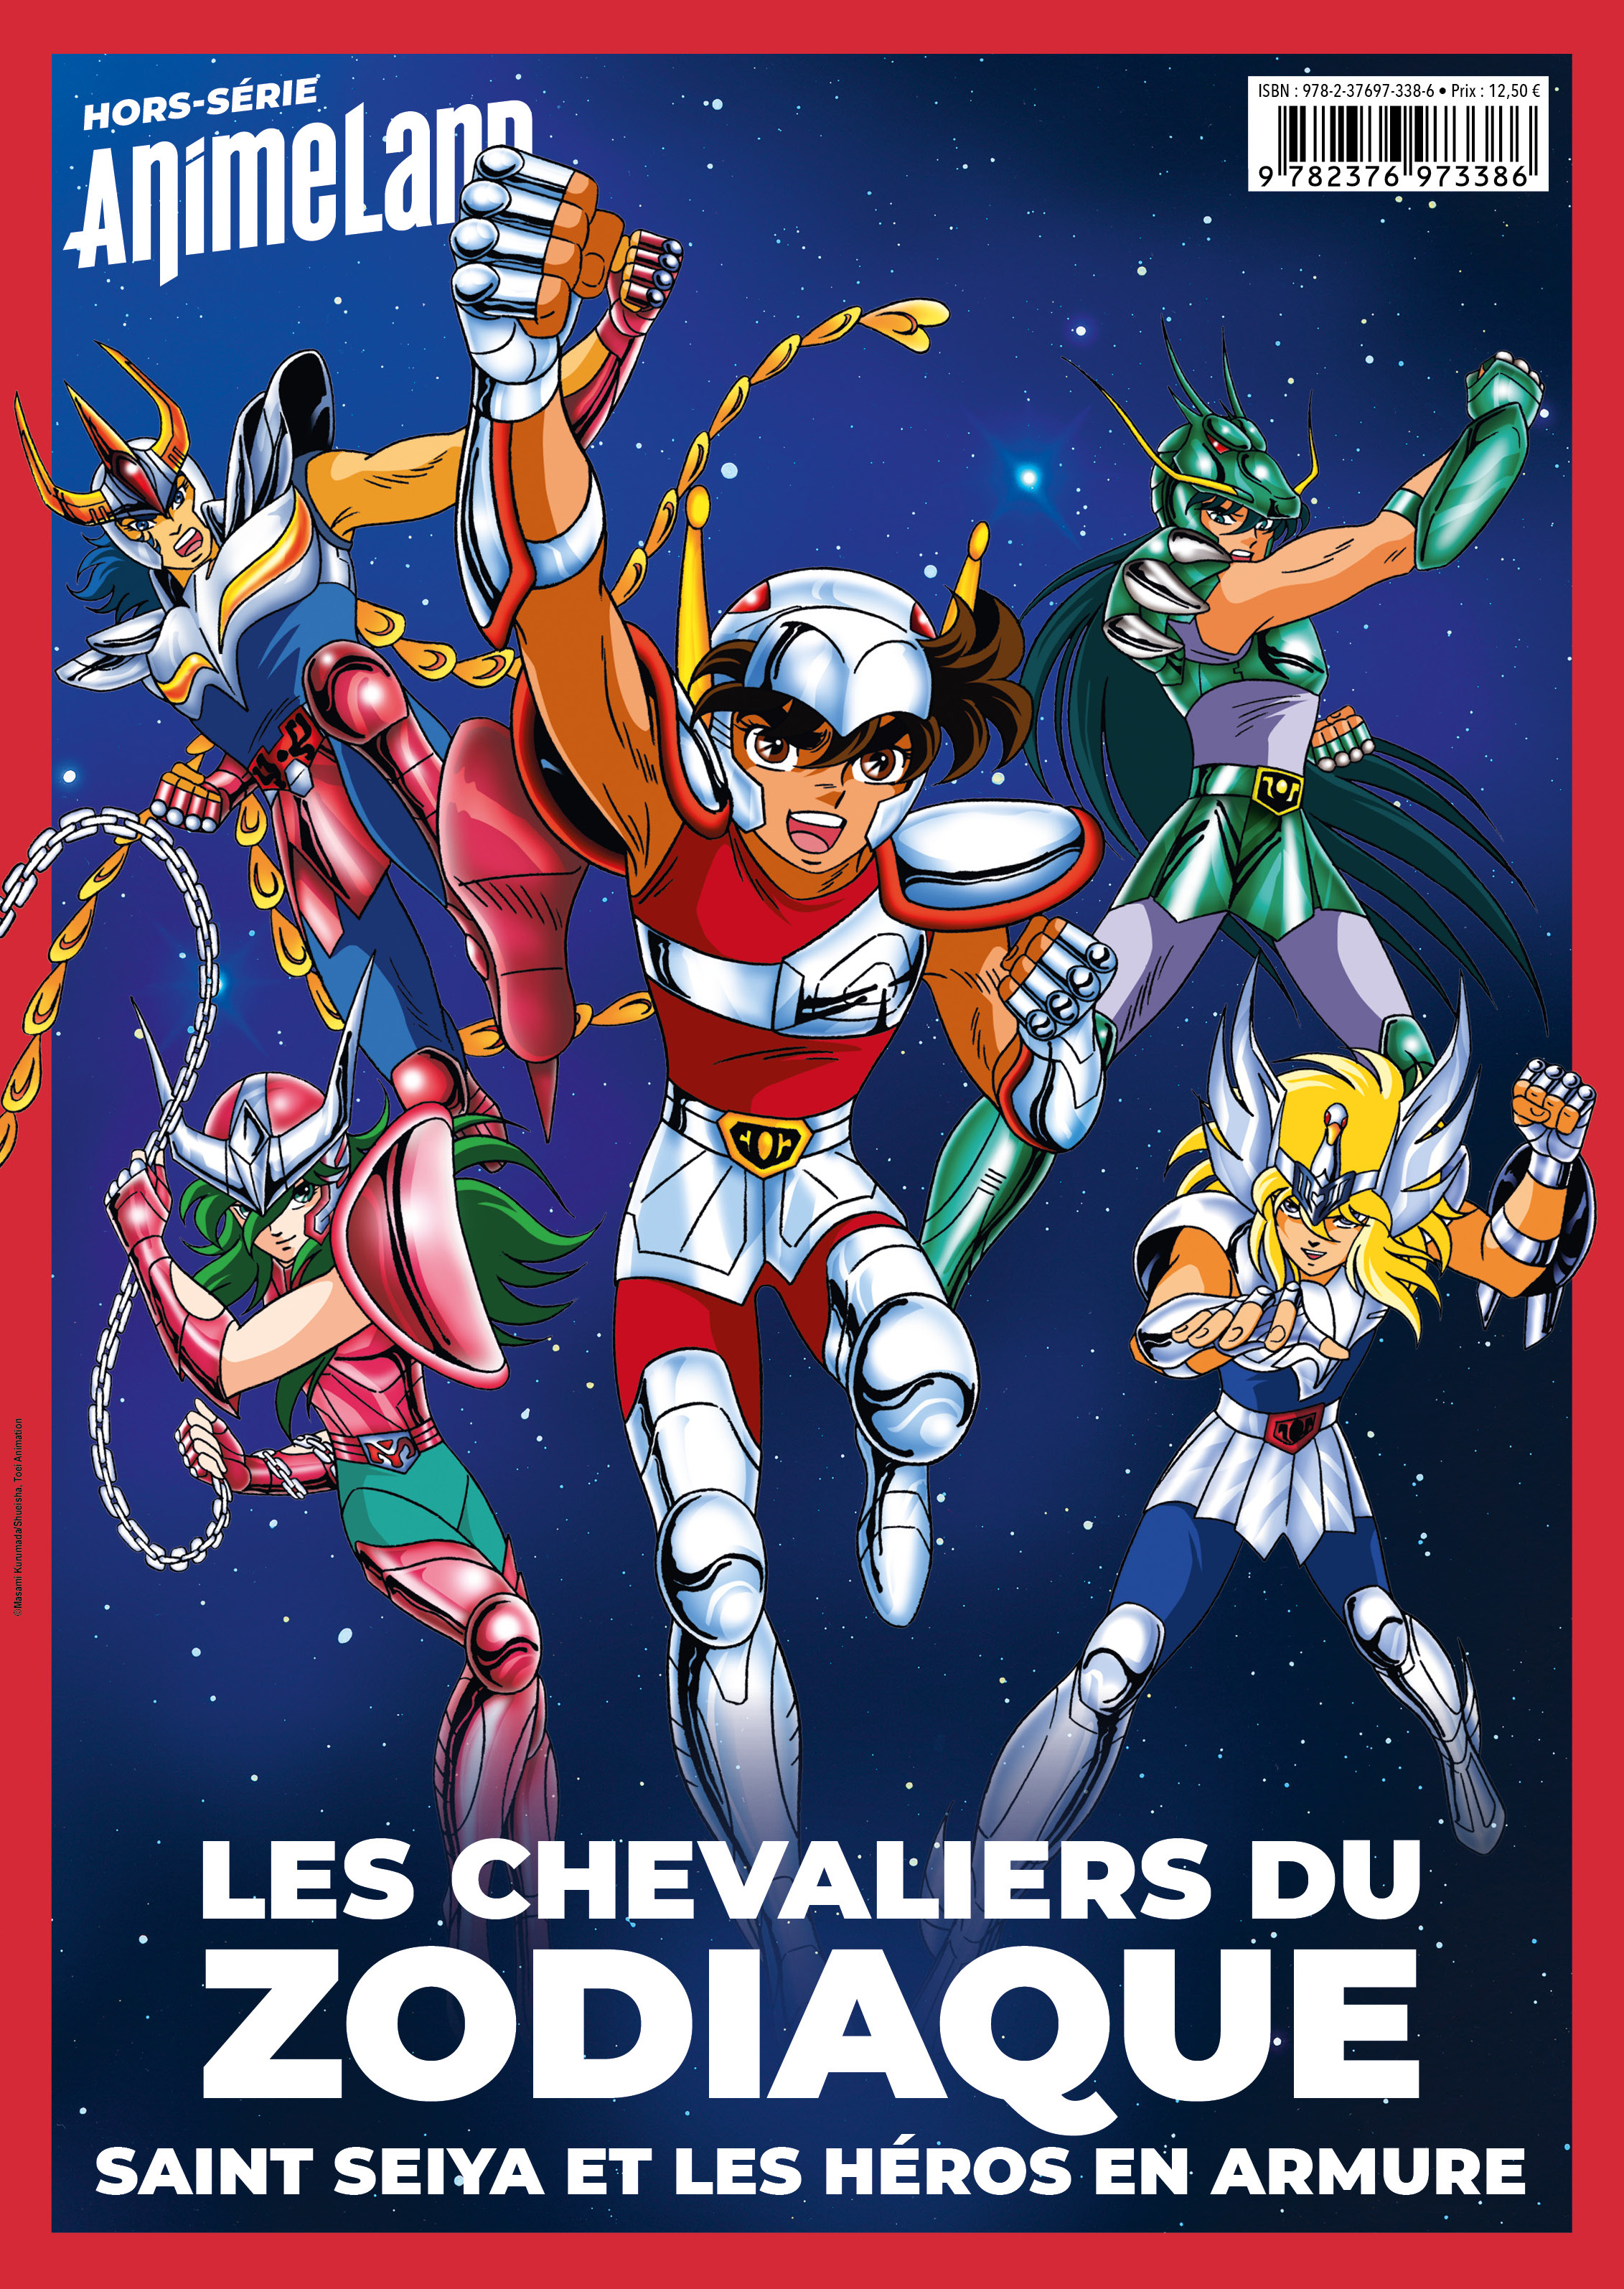 Les Chevaliers du Zodiaque France - Saint Seiya